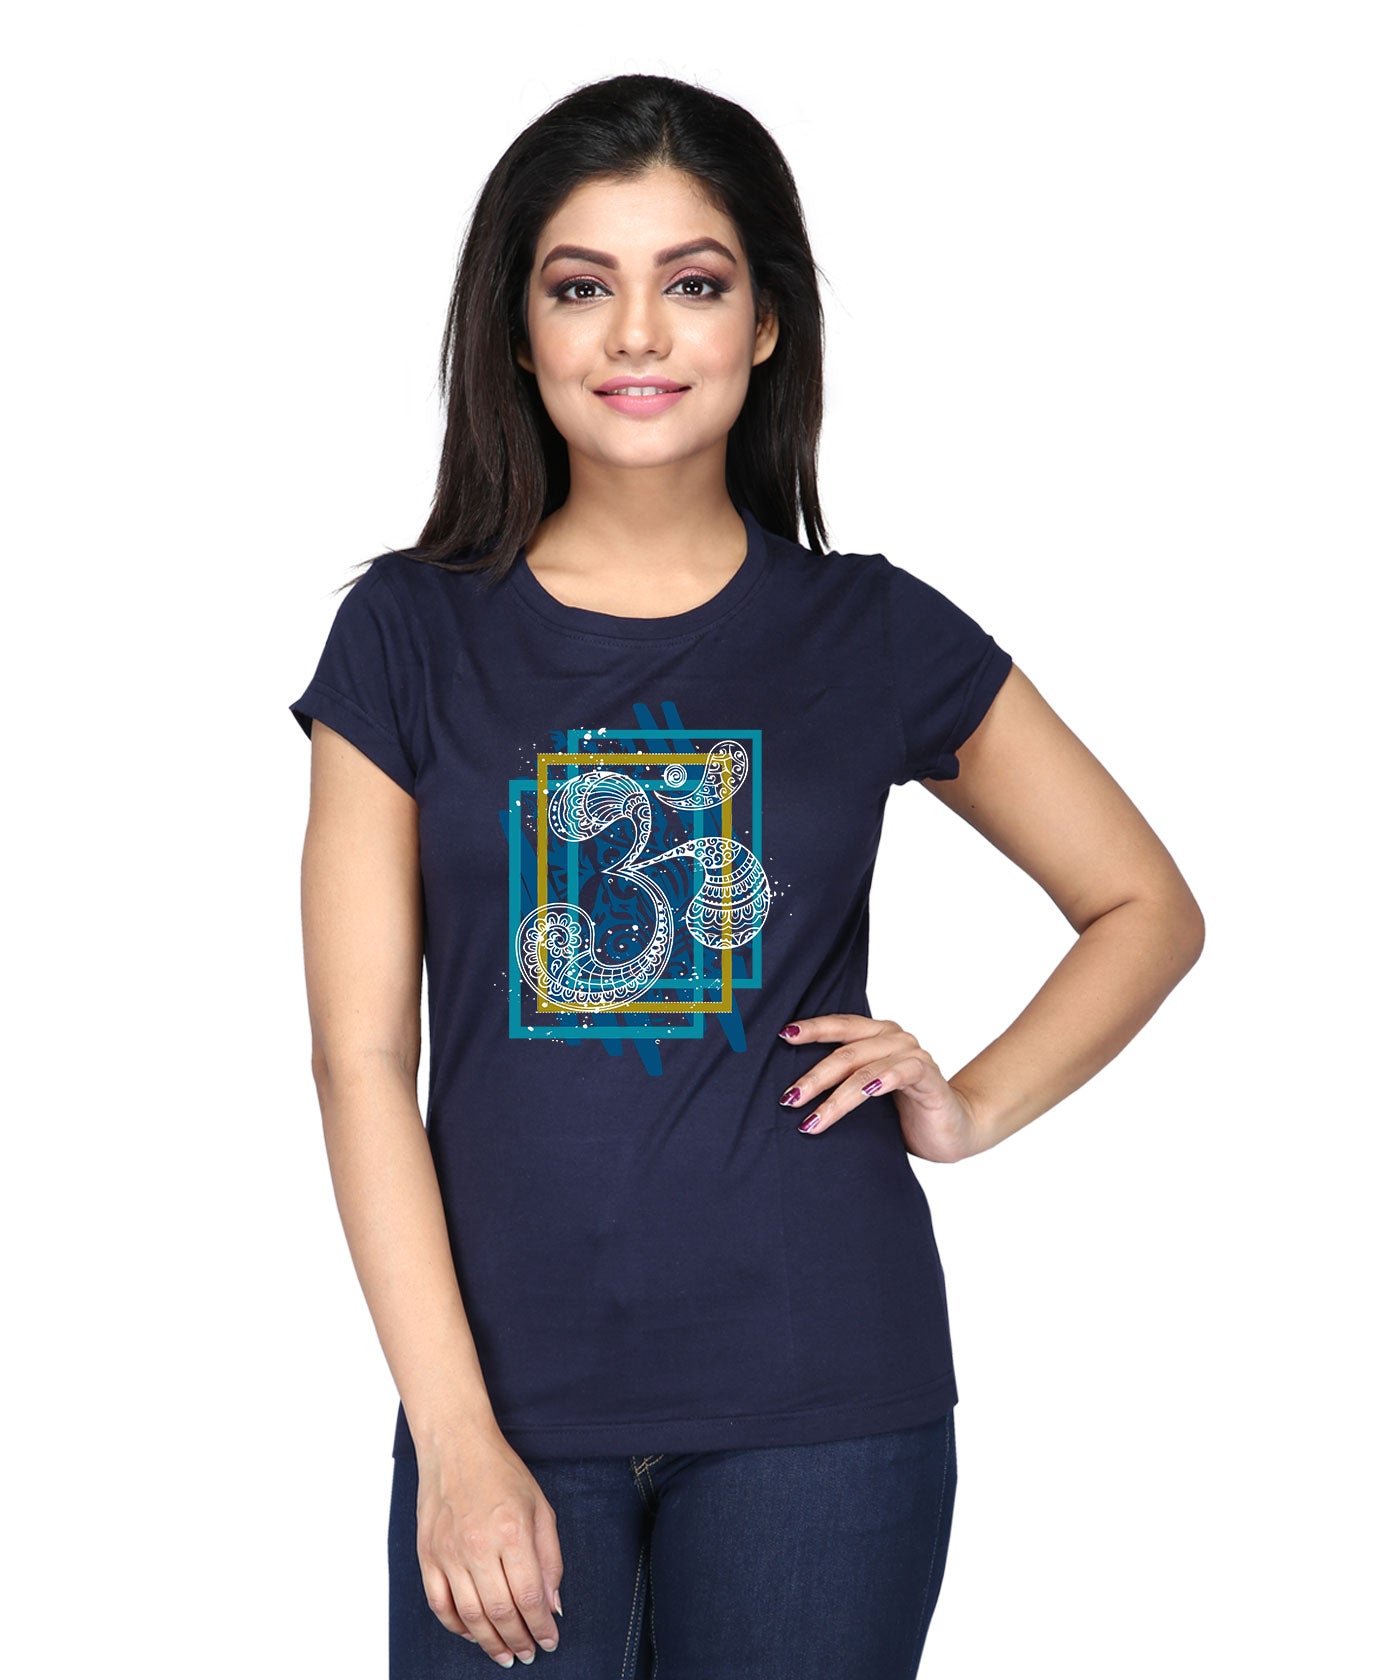 Square Om - Block Print Tees for Women - Navy Blue